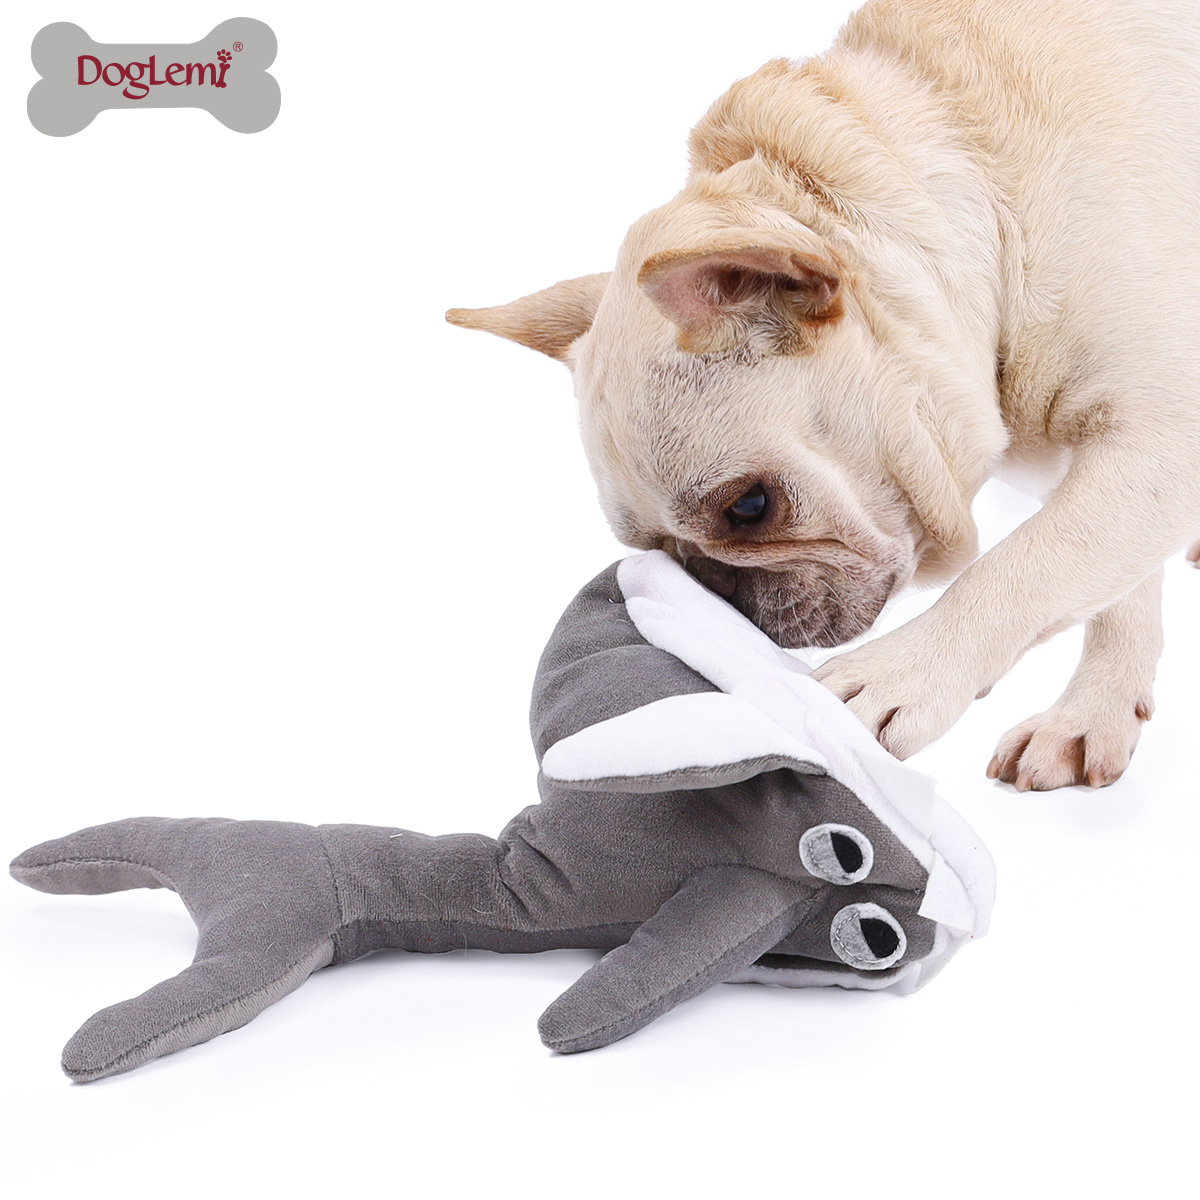 Pet shark toy